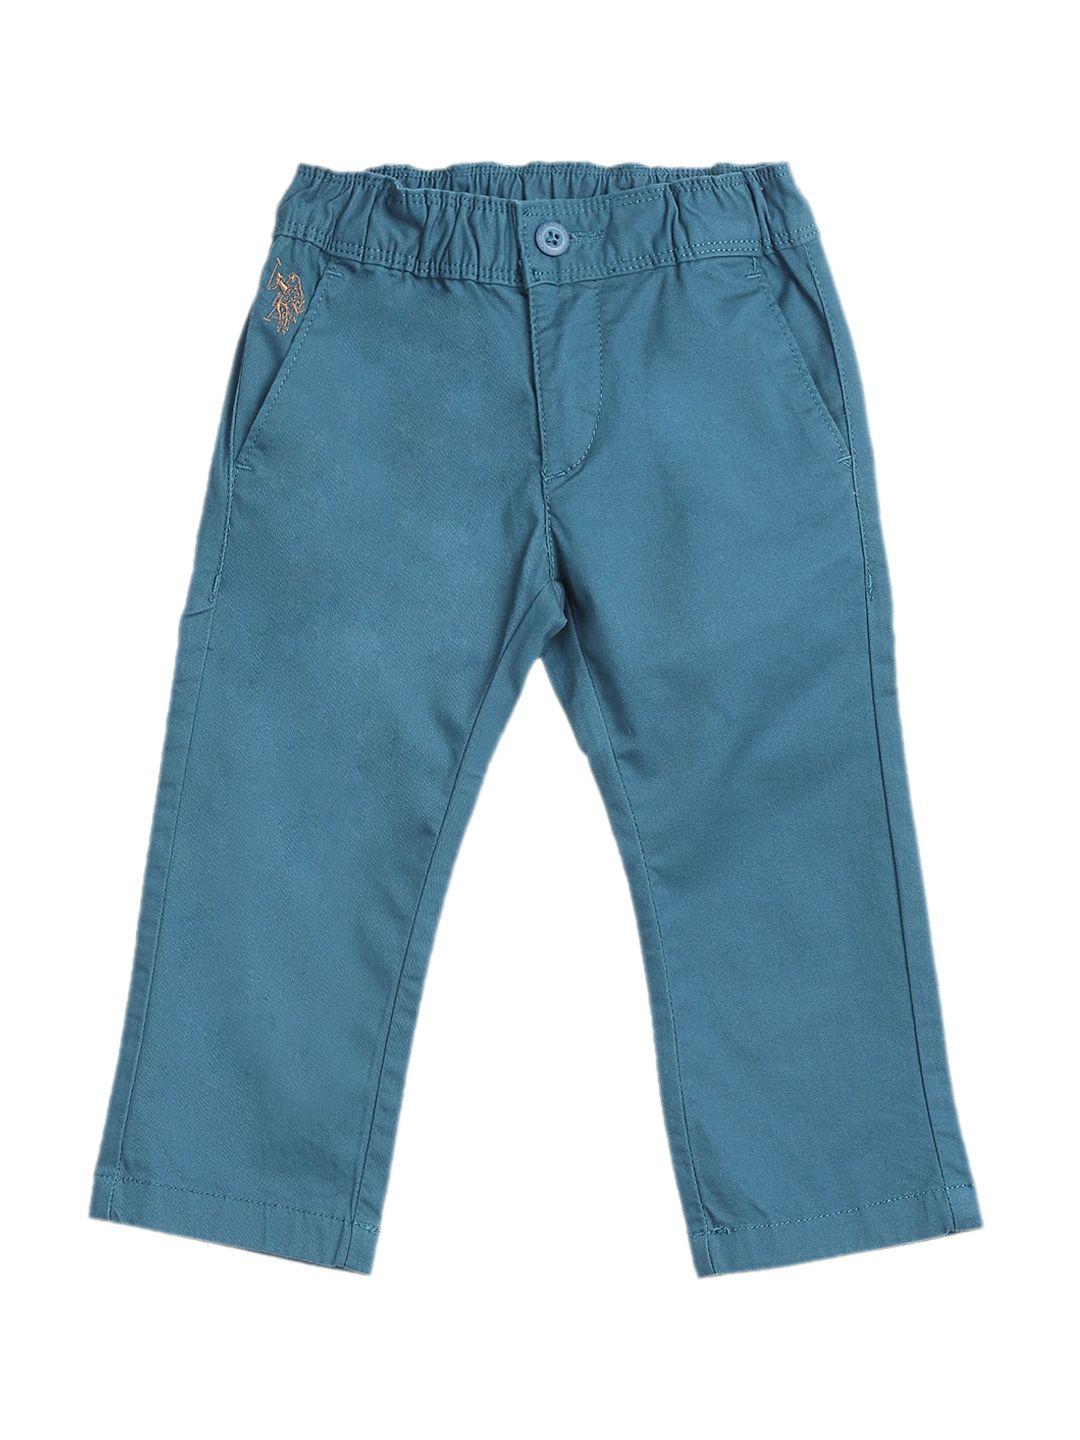 u-s-polo-assn-kids-boys-blue-trousers